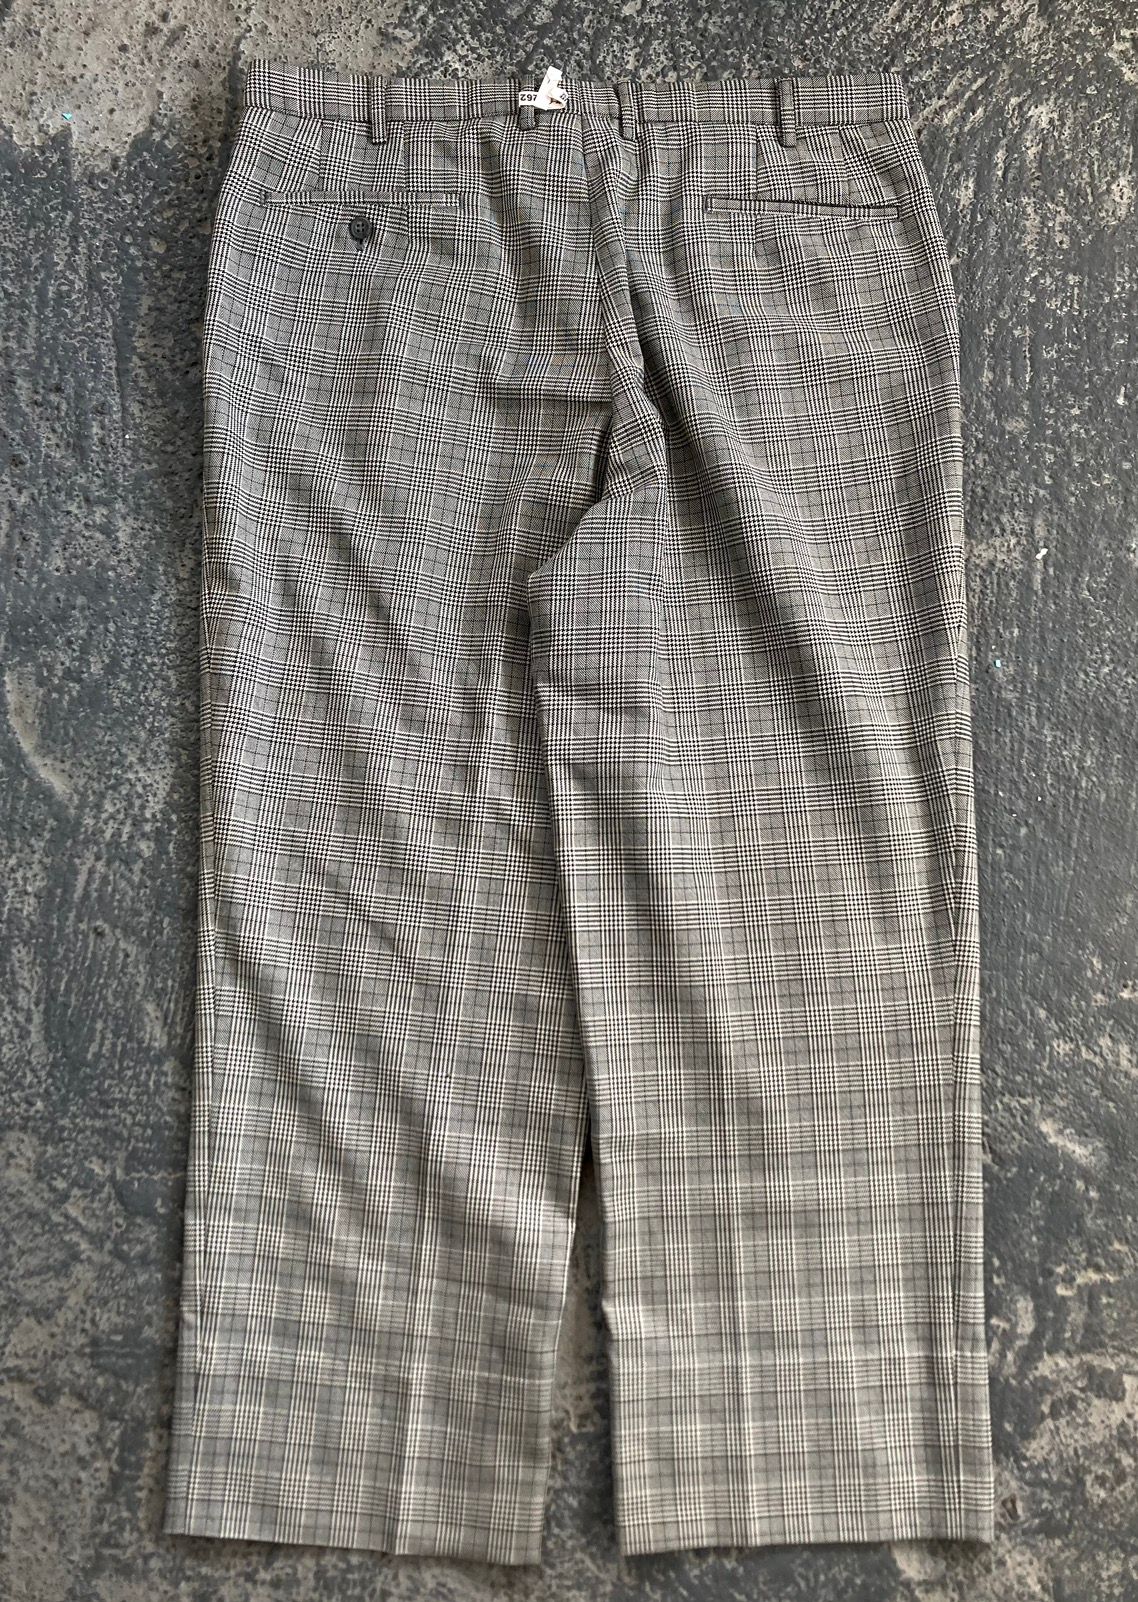 Vintage Japanese Glen Check Trousers - 2